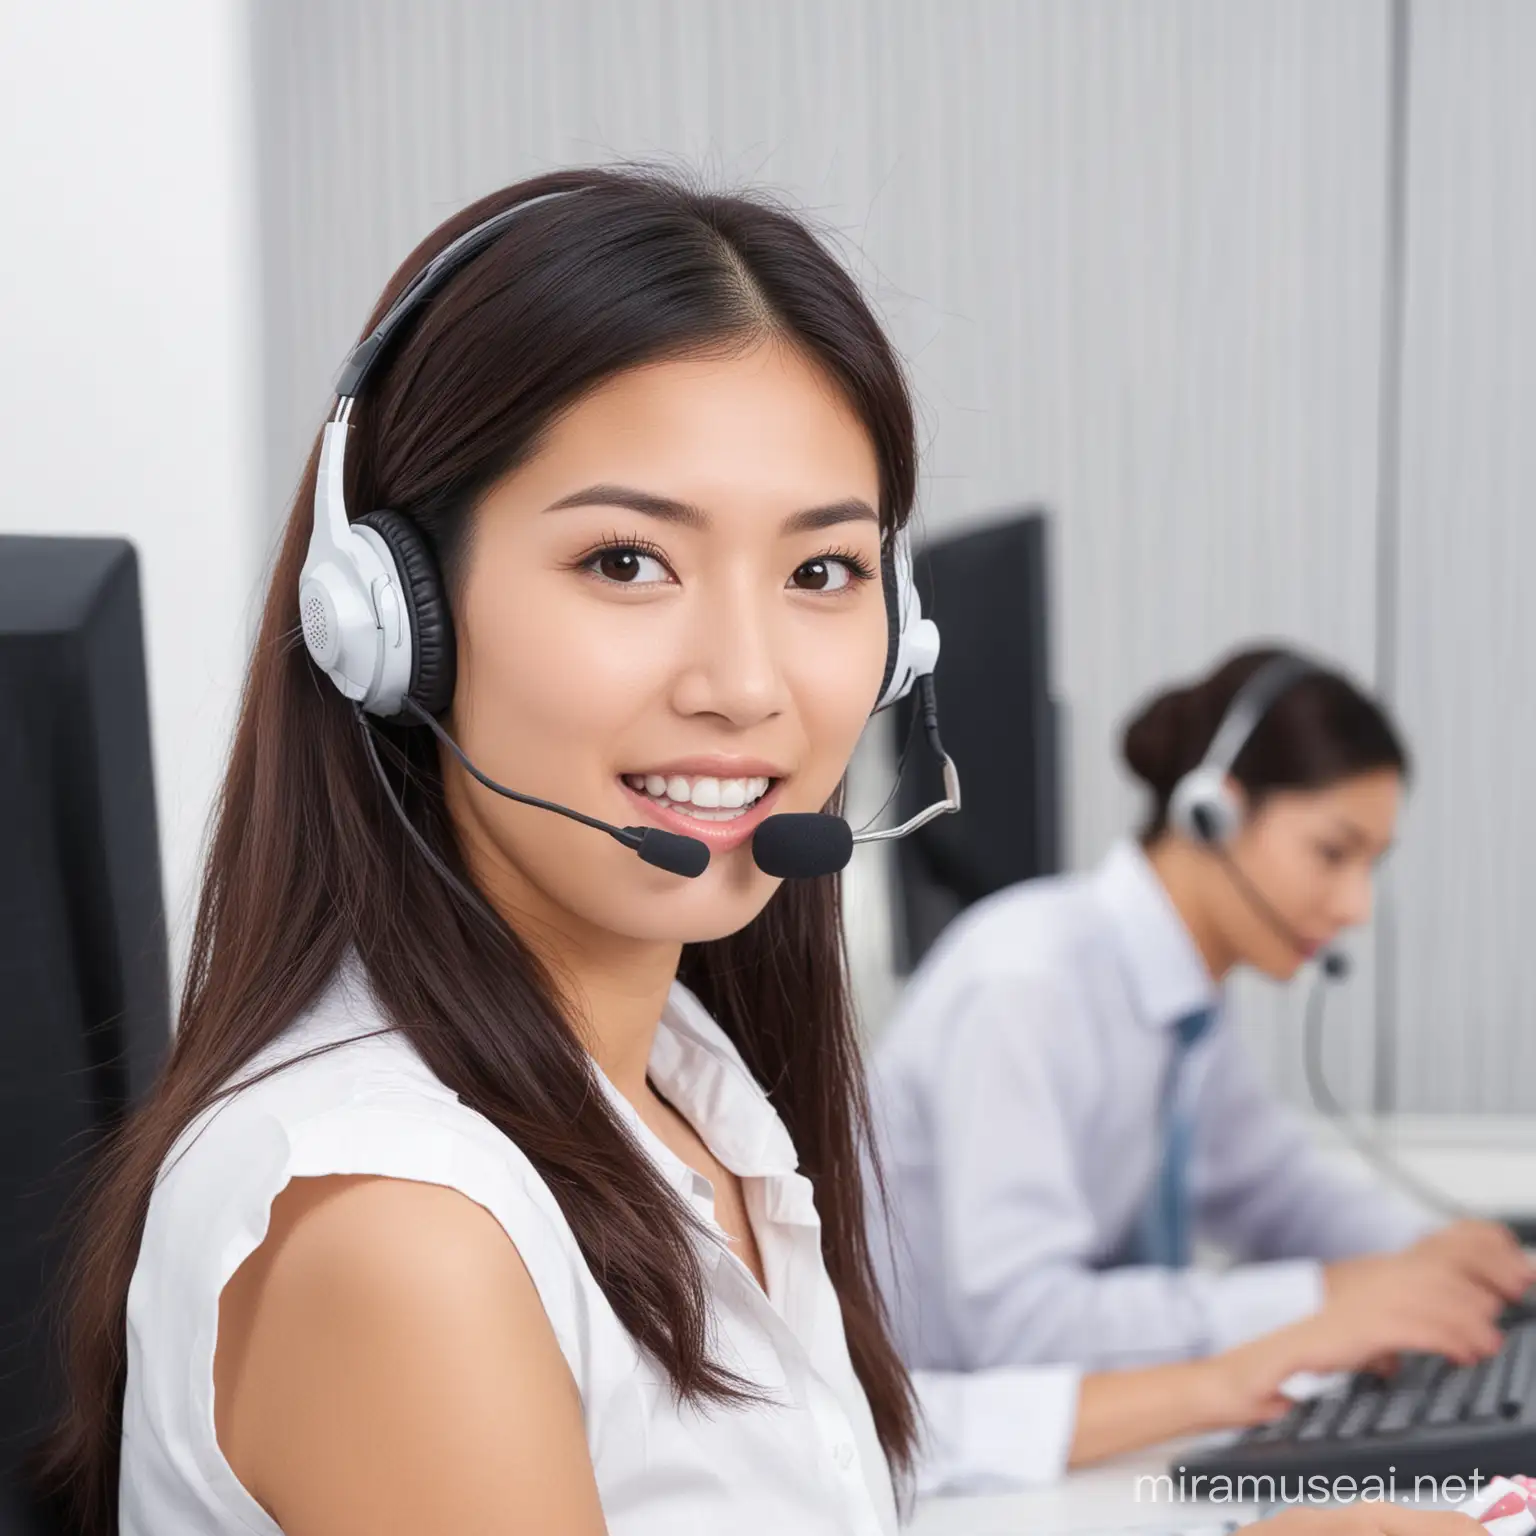 Asian Female Call Center Representative in Modern Office Environment